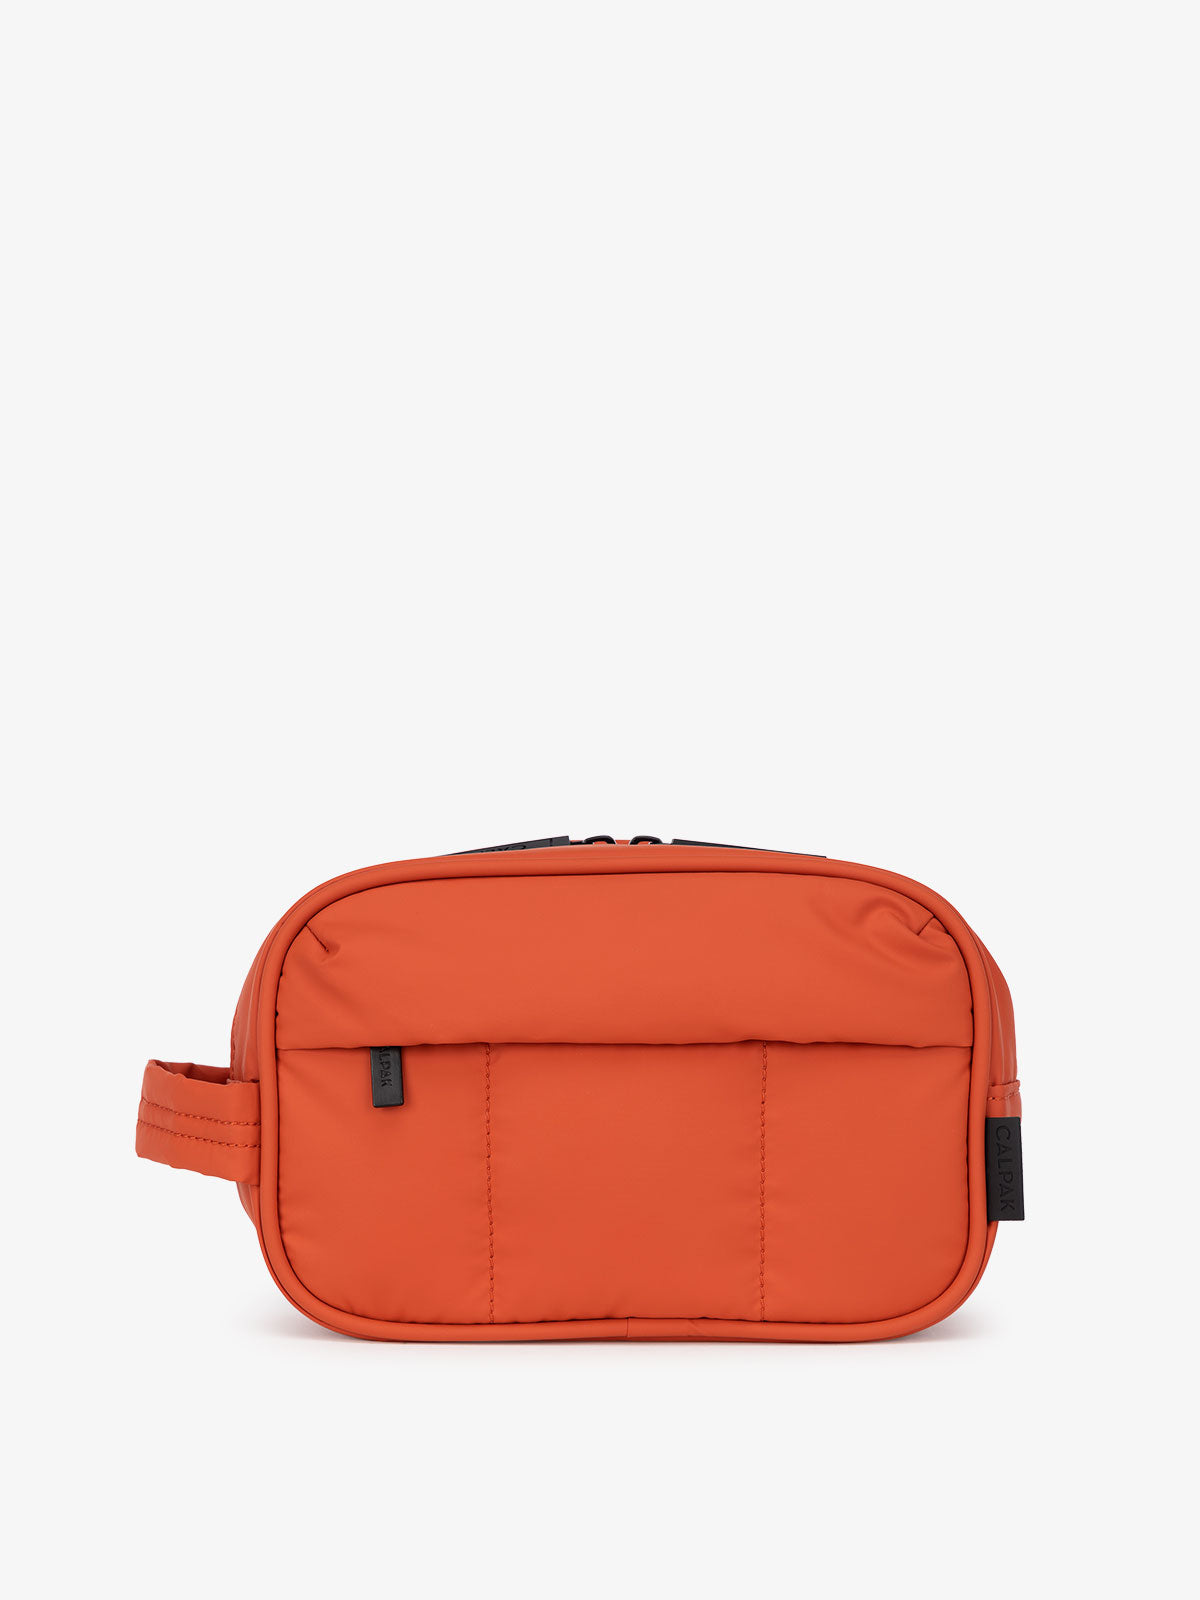 CALPAK Luka toiletry bag in red orange